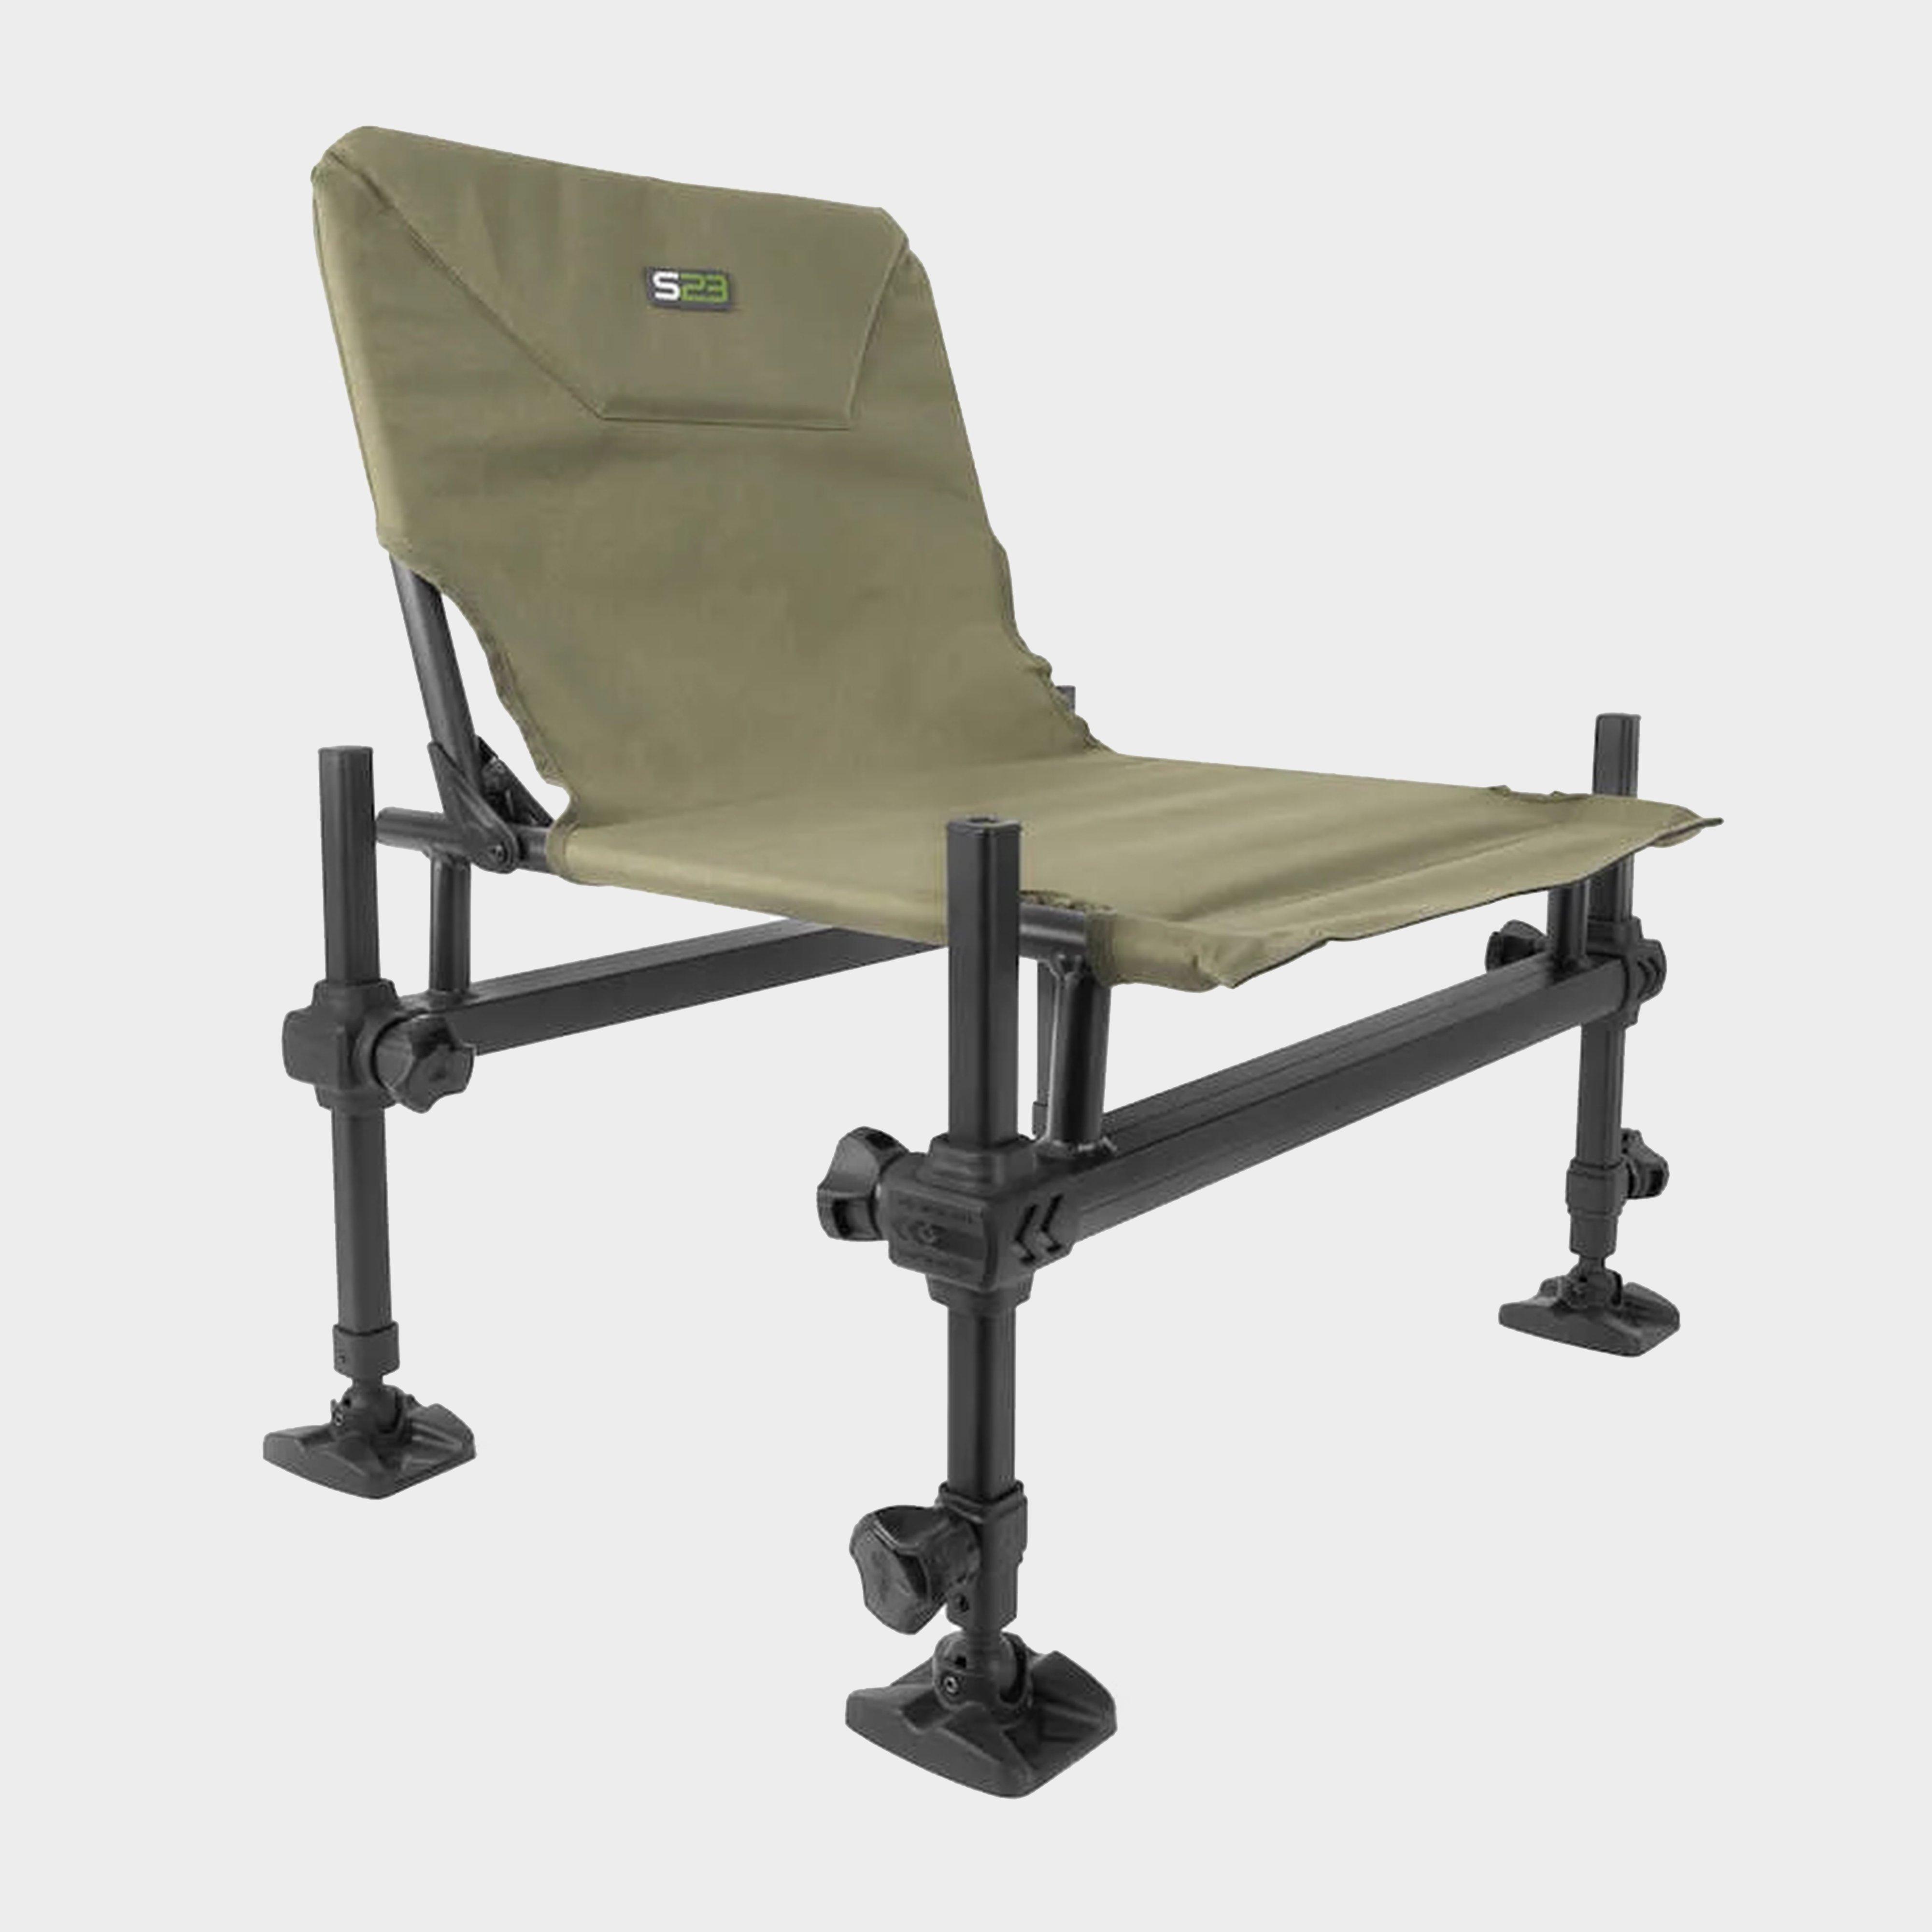  KORUM S23 Compact Accessory Fishing Chair, Green